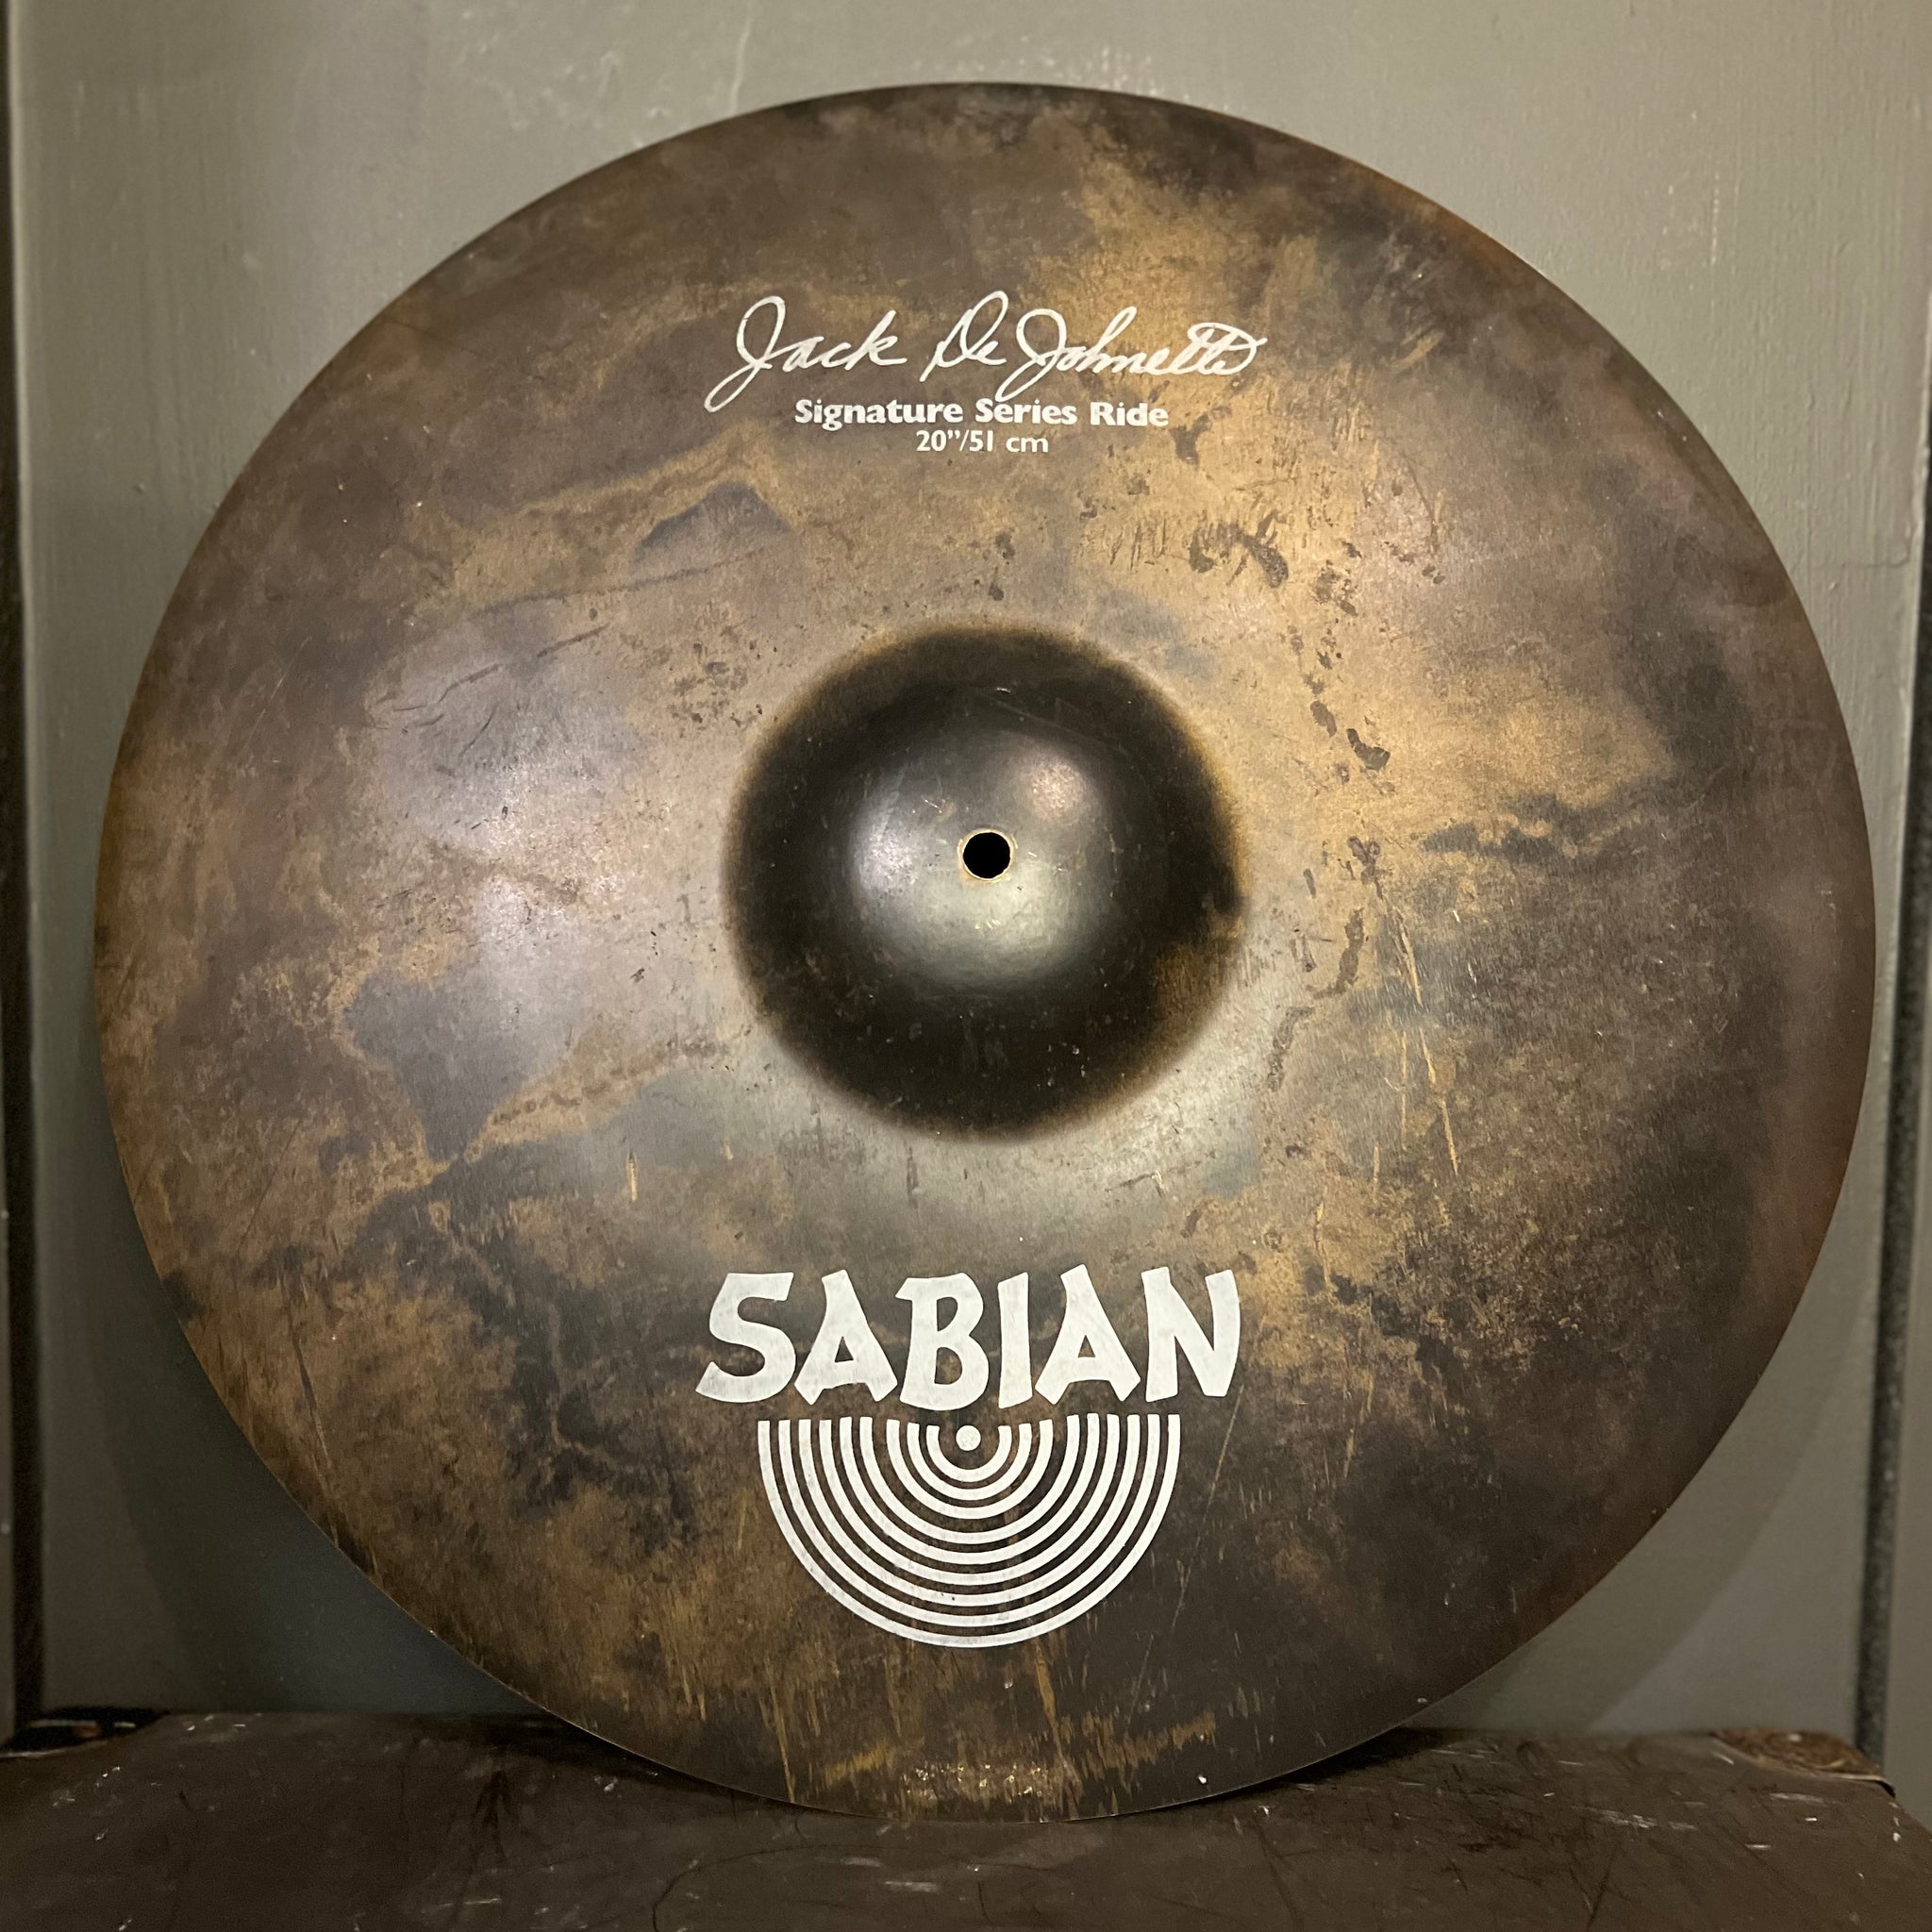 USED Sabian 20" Jack DeJohnette Signature Ride Cymbal - 2602